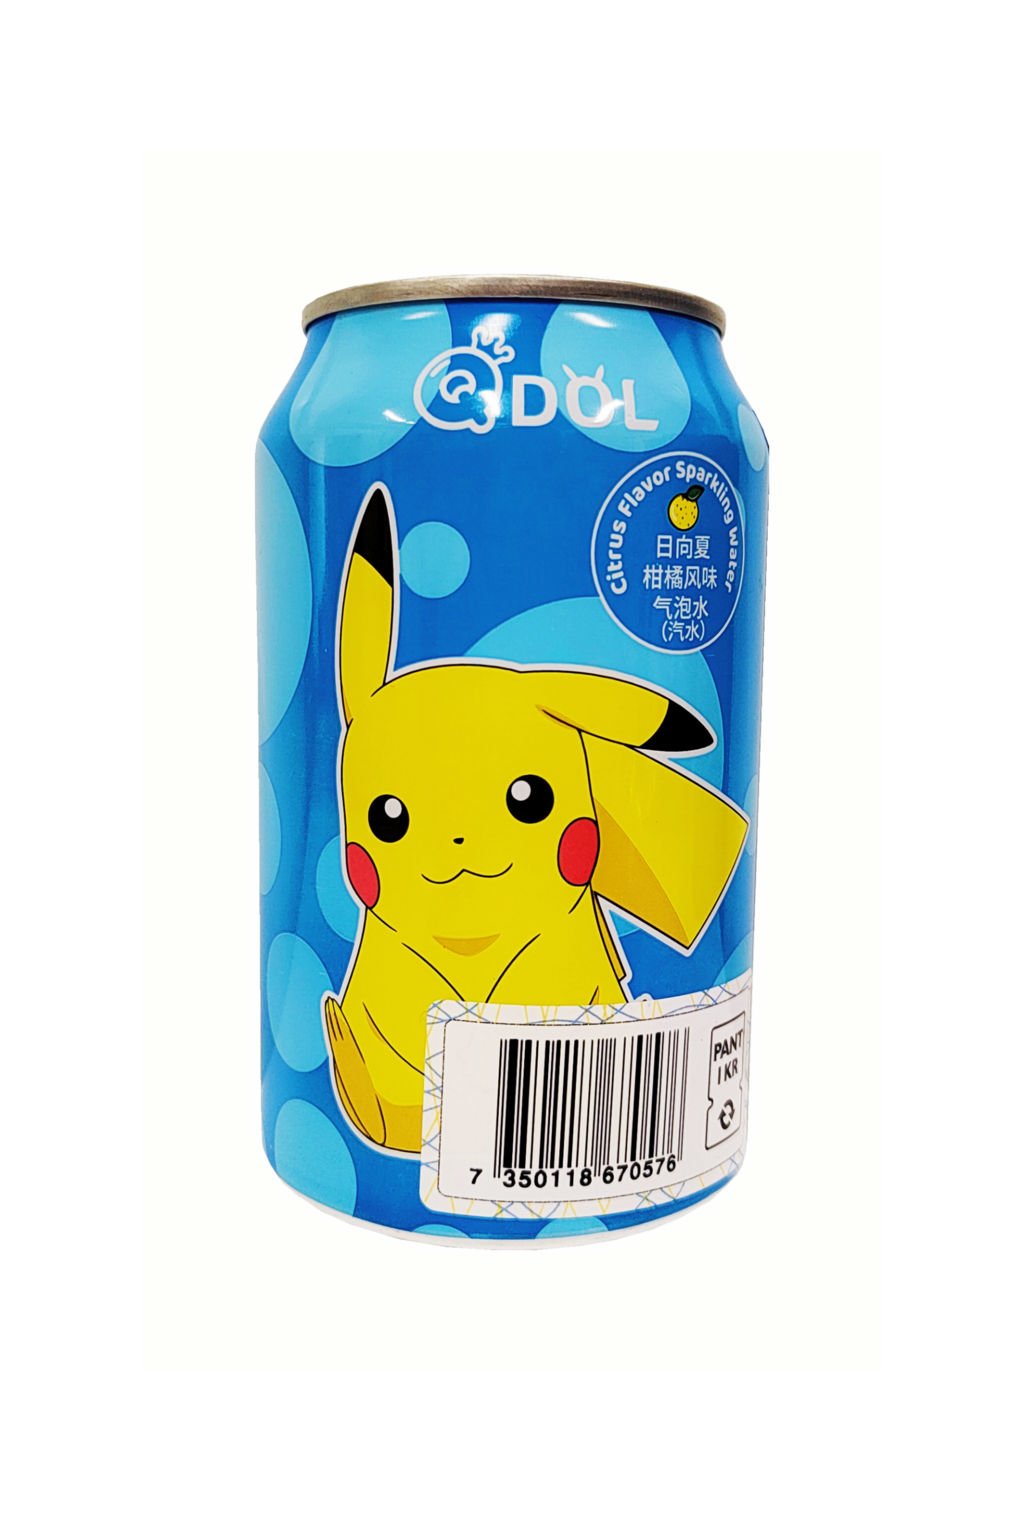 Soda Tangerine Flavour 330ml QDOL Pokemon 330ml China